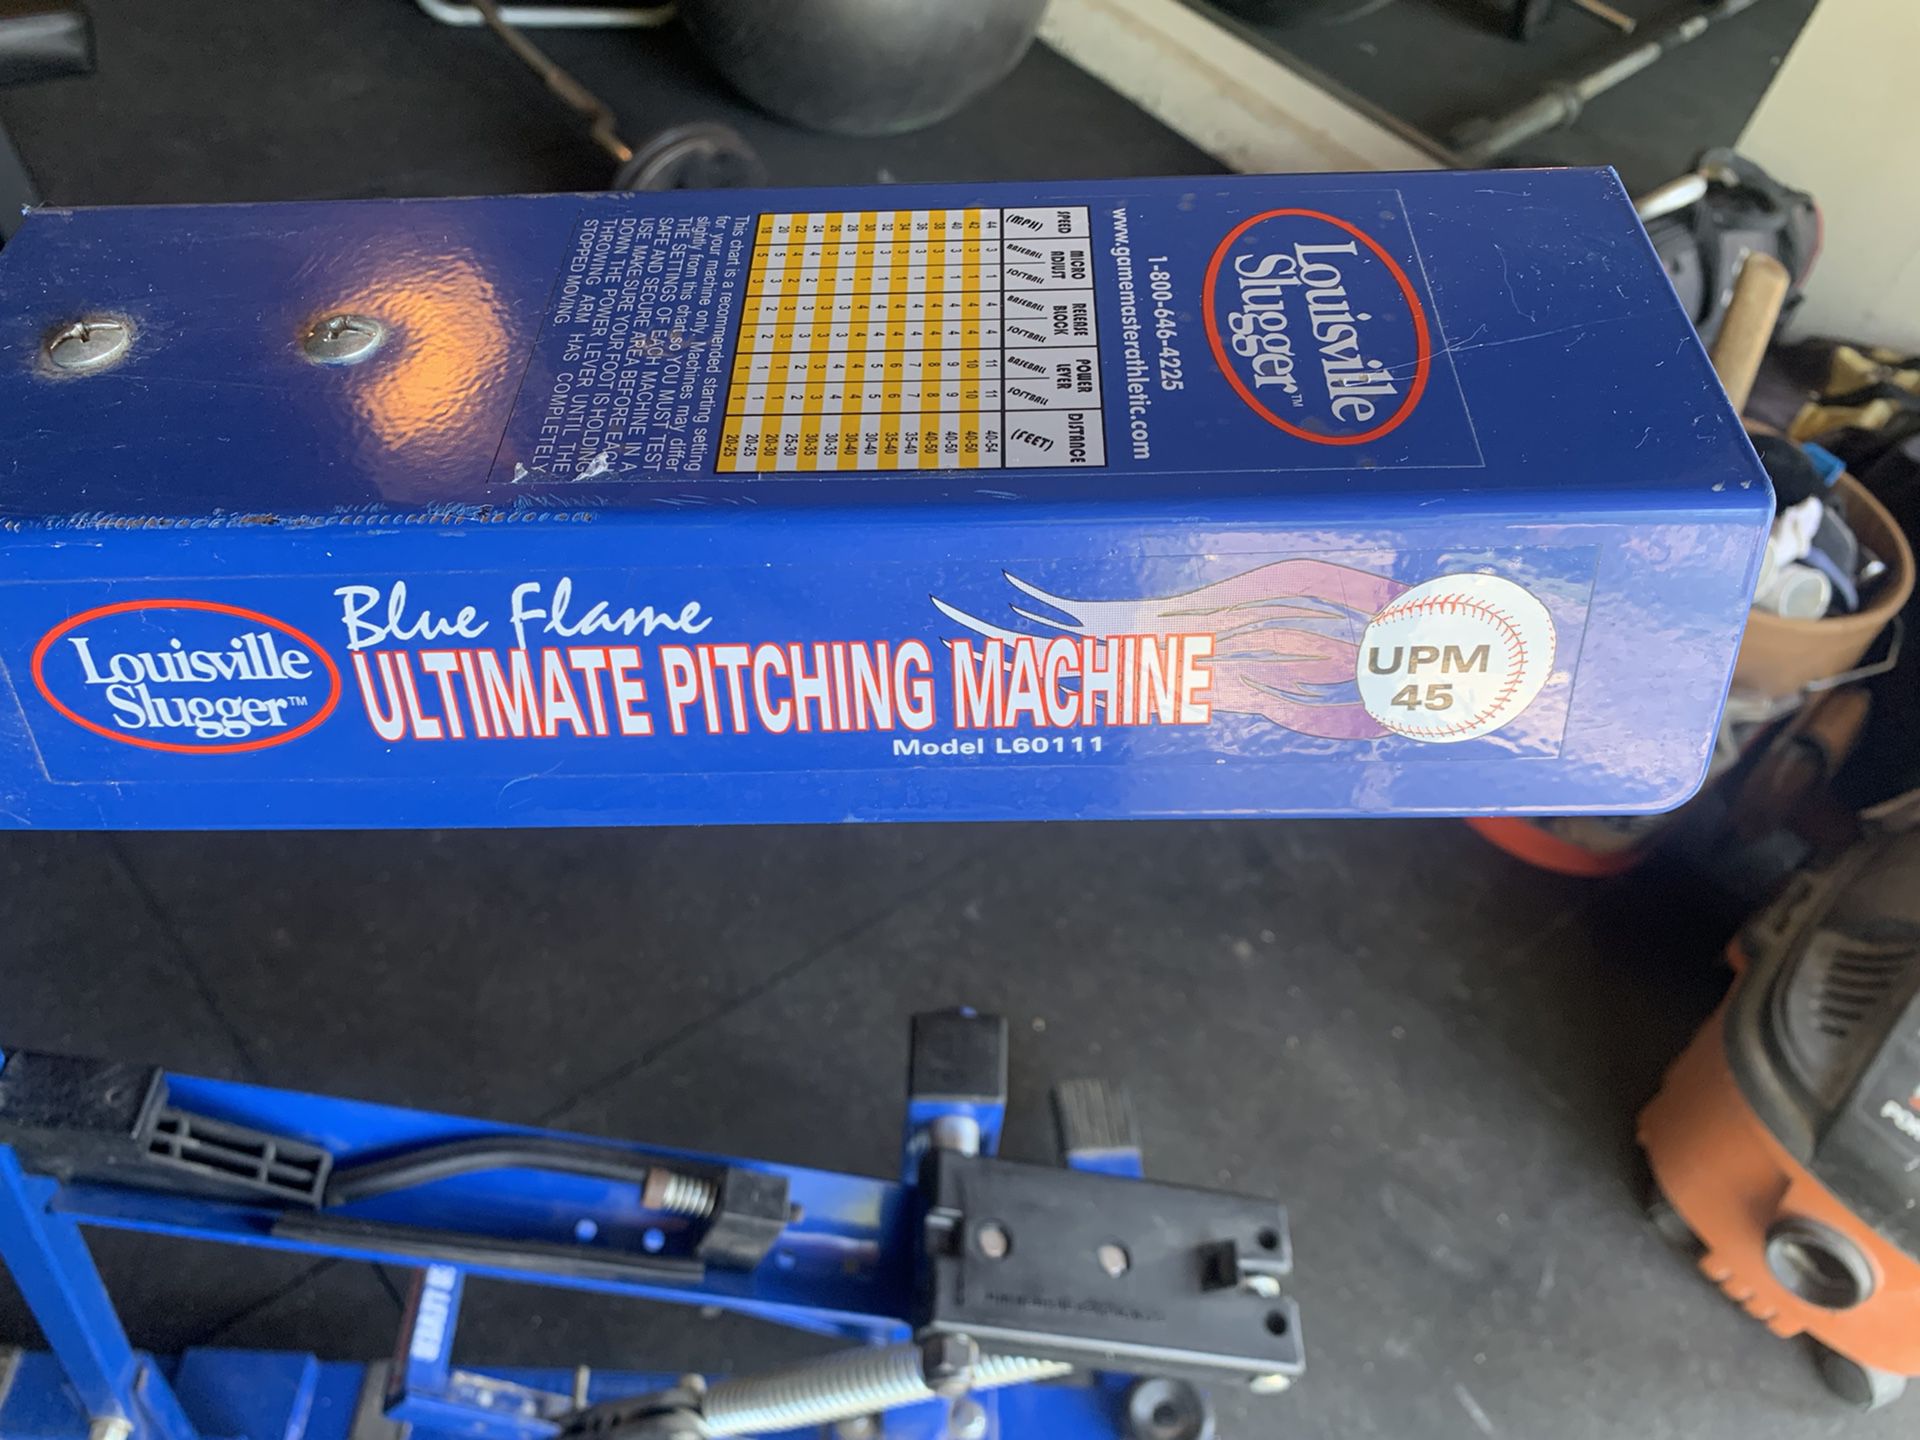 Louisville Slugger Blue Flame Pitching Machine - UPM45